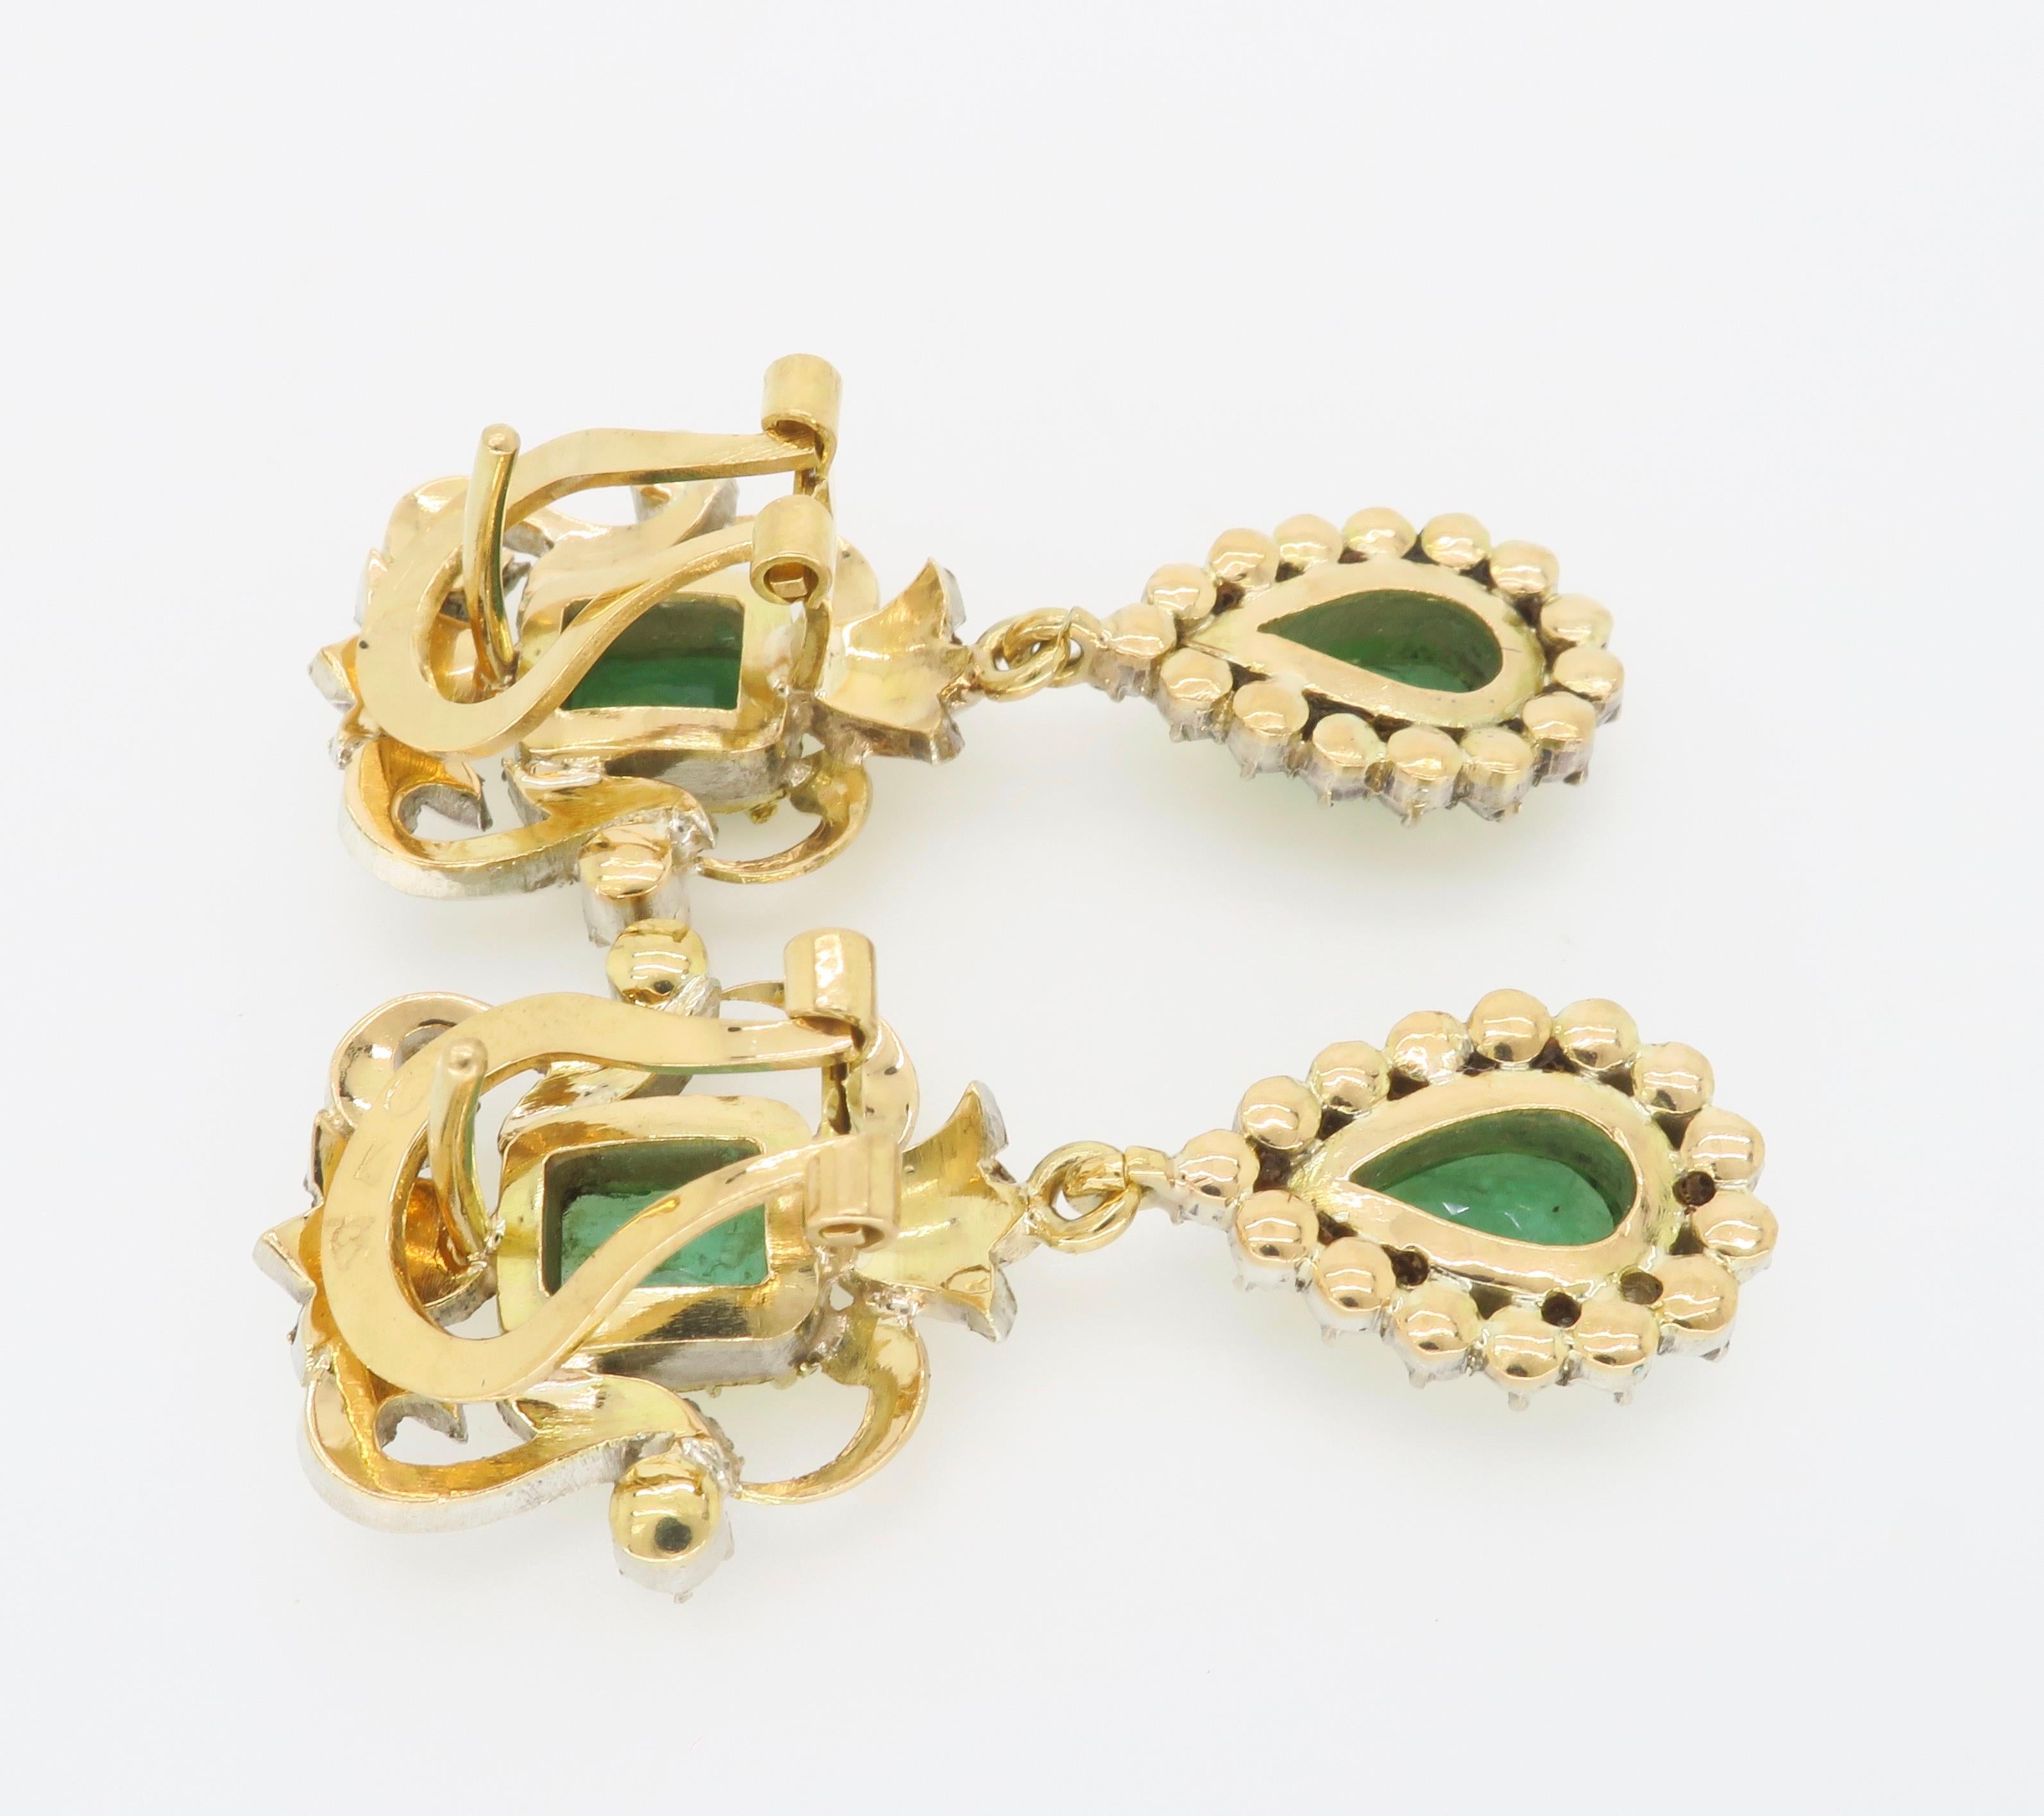 19th Century Emerald & Rose cut diamond chandelier earrings made in 18k white & yellow gold. 

Gemstone: Emerald & Diamond
Gemstone Carat Weight: Approximately 2.00ctw 
Diamond Carat Weight:  Approximately .25CTW
Diamond Cut: Rose Cut 
Metal: 18K